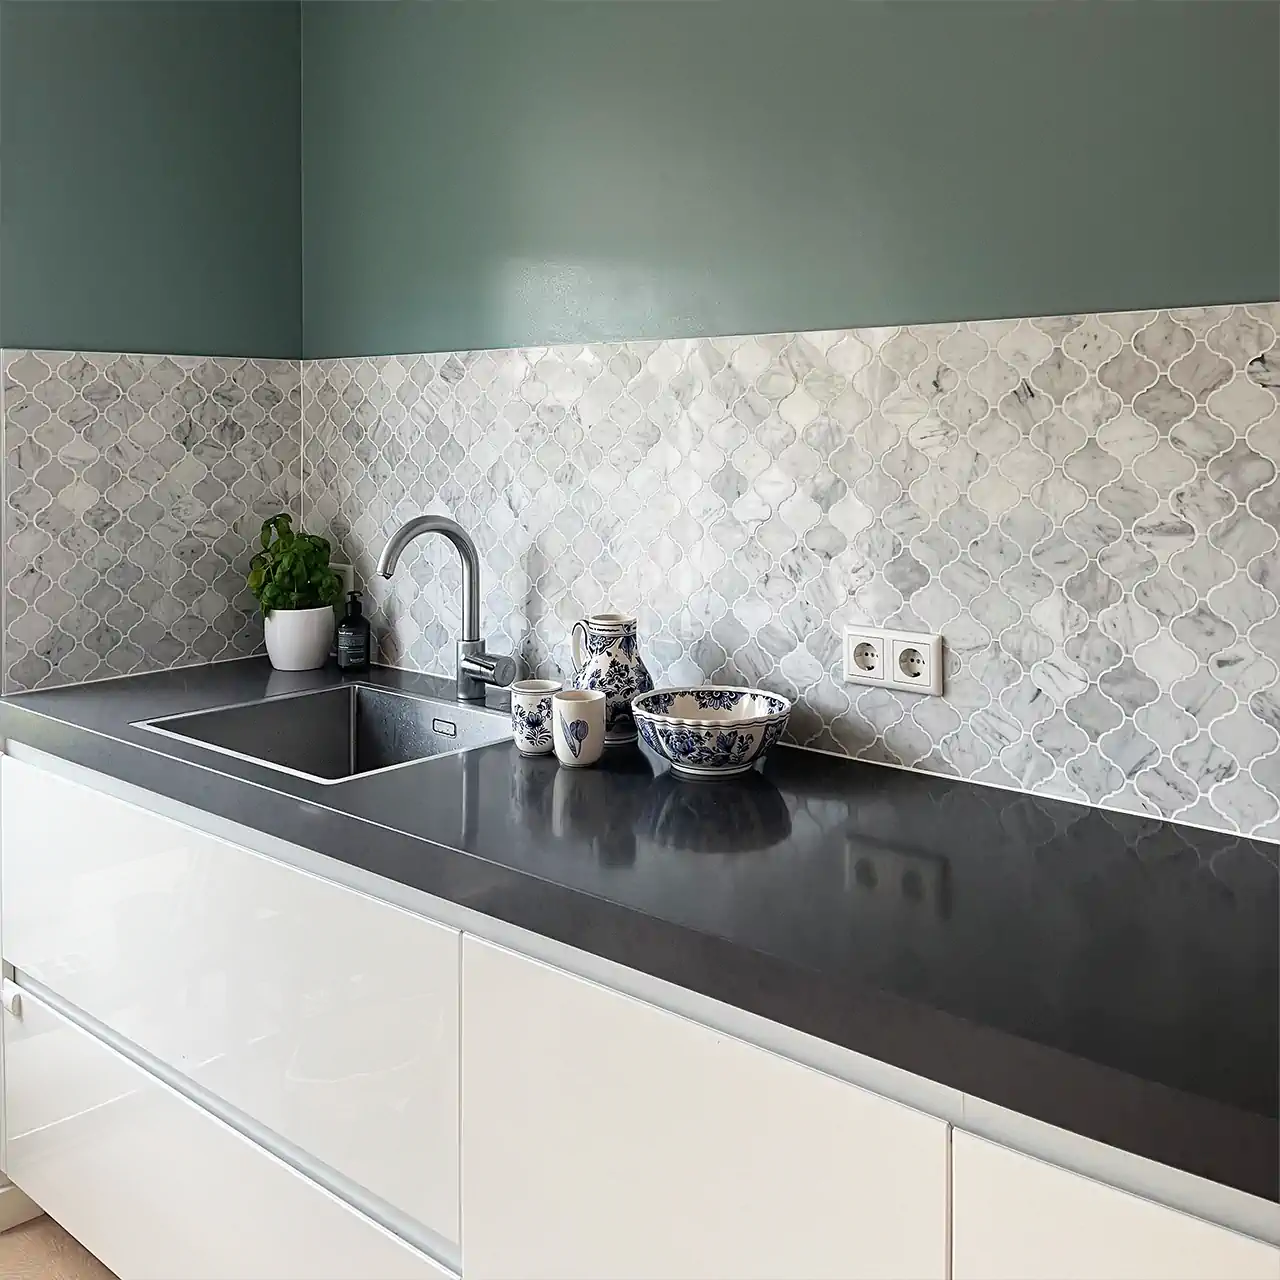 Arabesque Marble Tiles as Kitchen Splashback Design Ideas